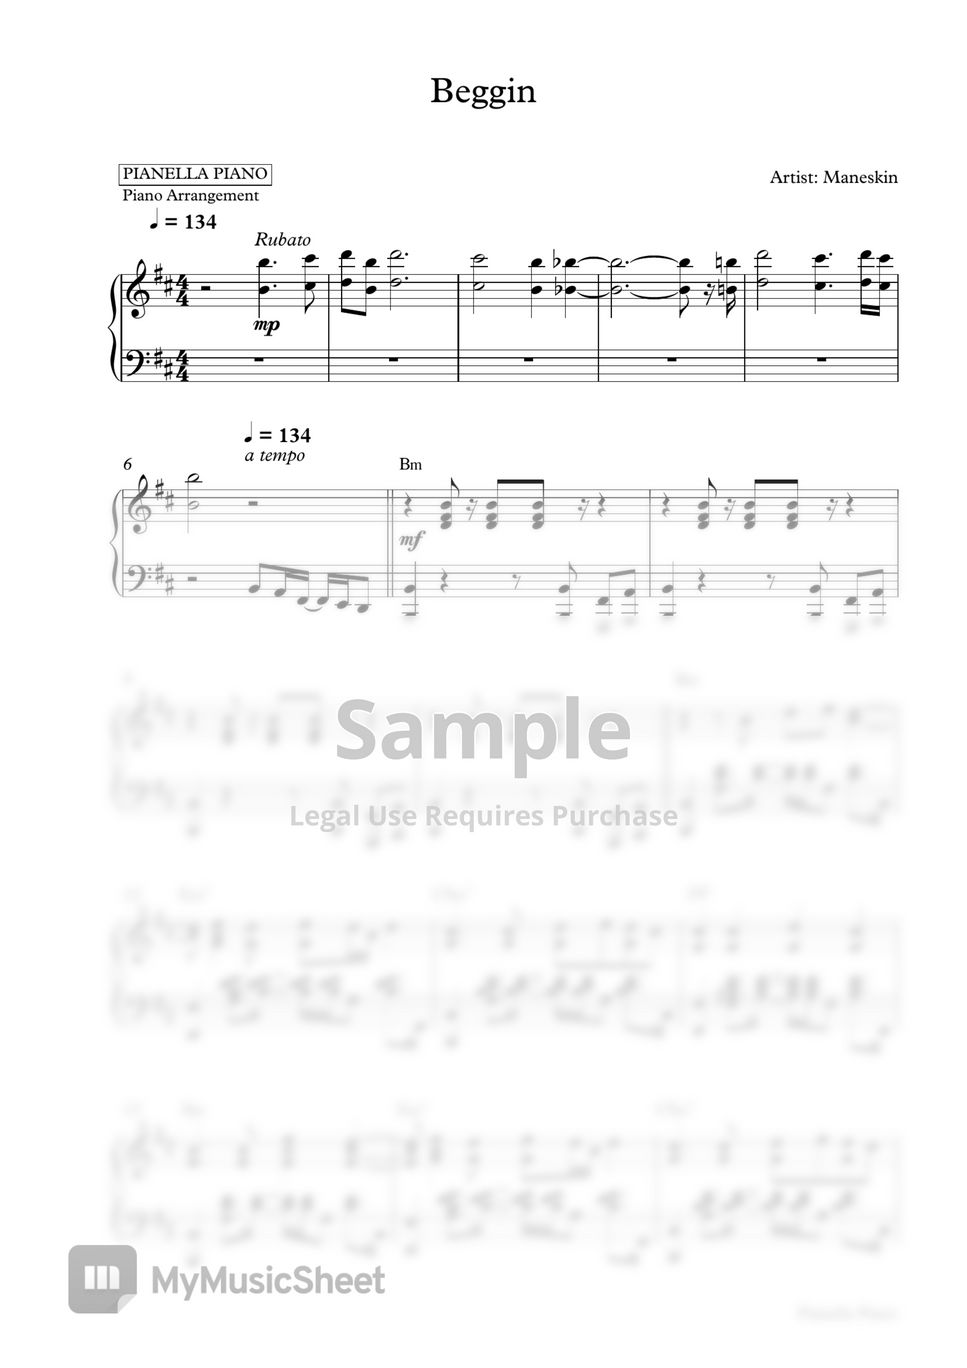 Maneskin - Beggin (Piano Sheet) by Pianella Piano